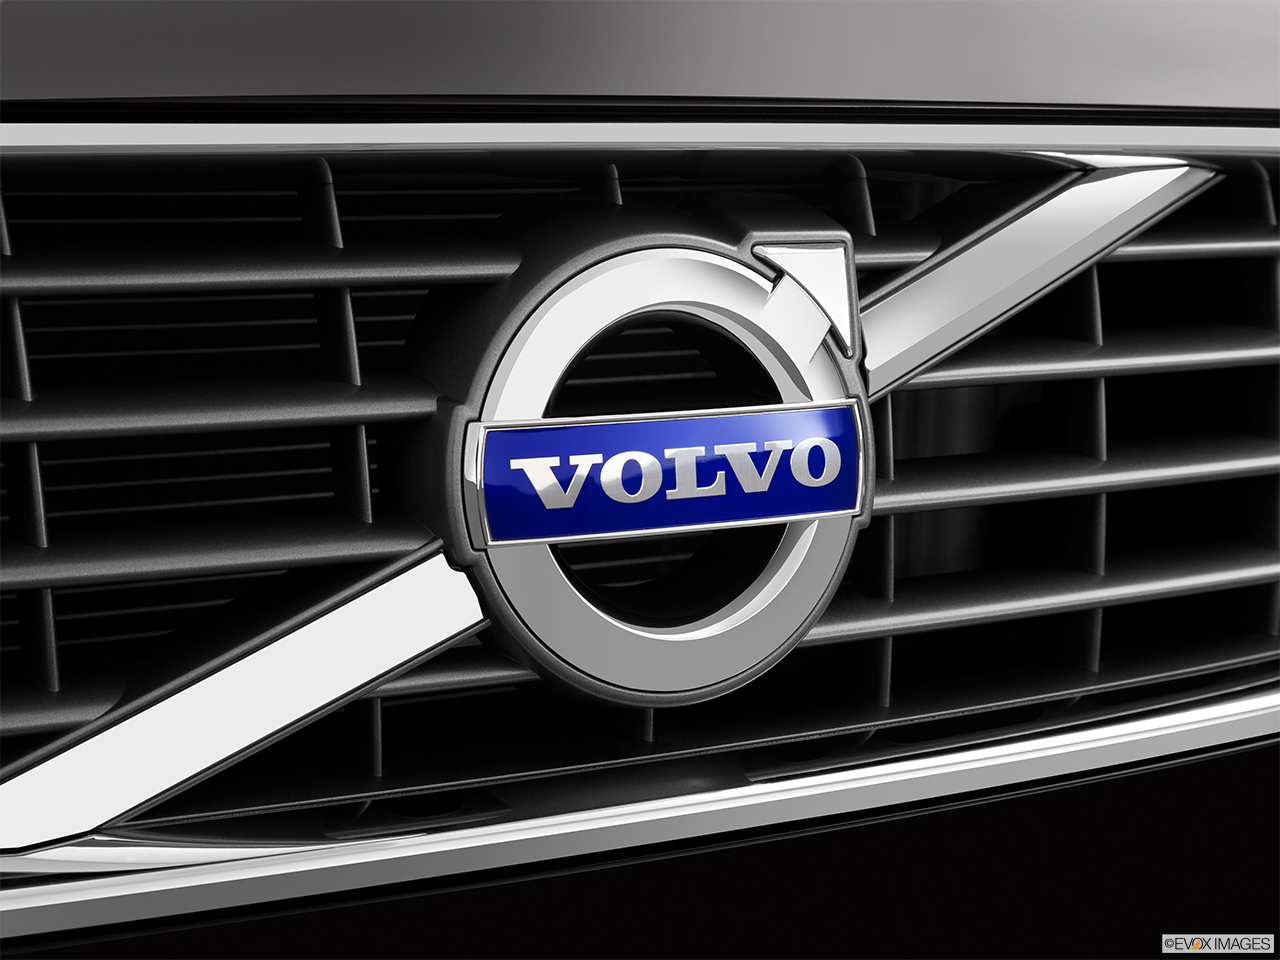 2013 Volvo S80 3.2 Platinum Rear manufacture badge/emblem 